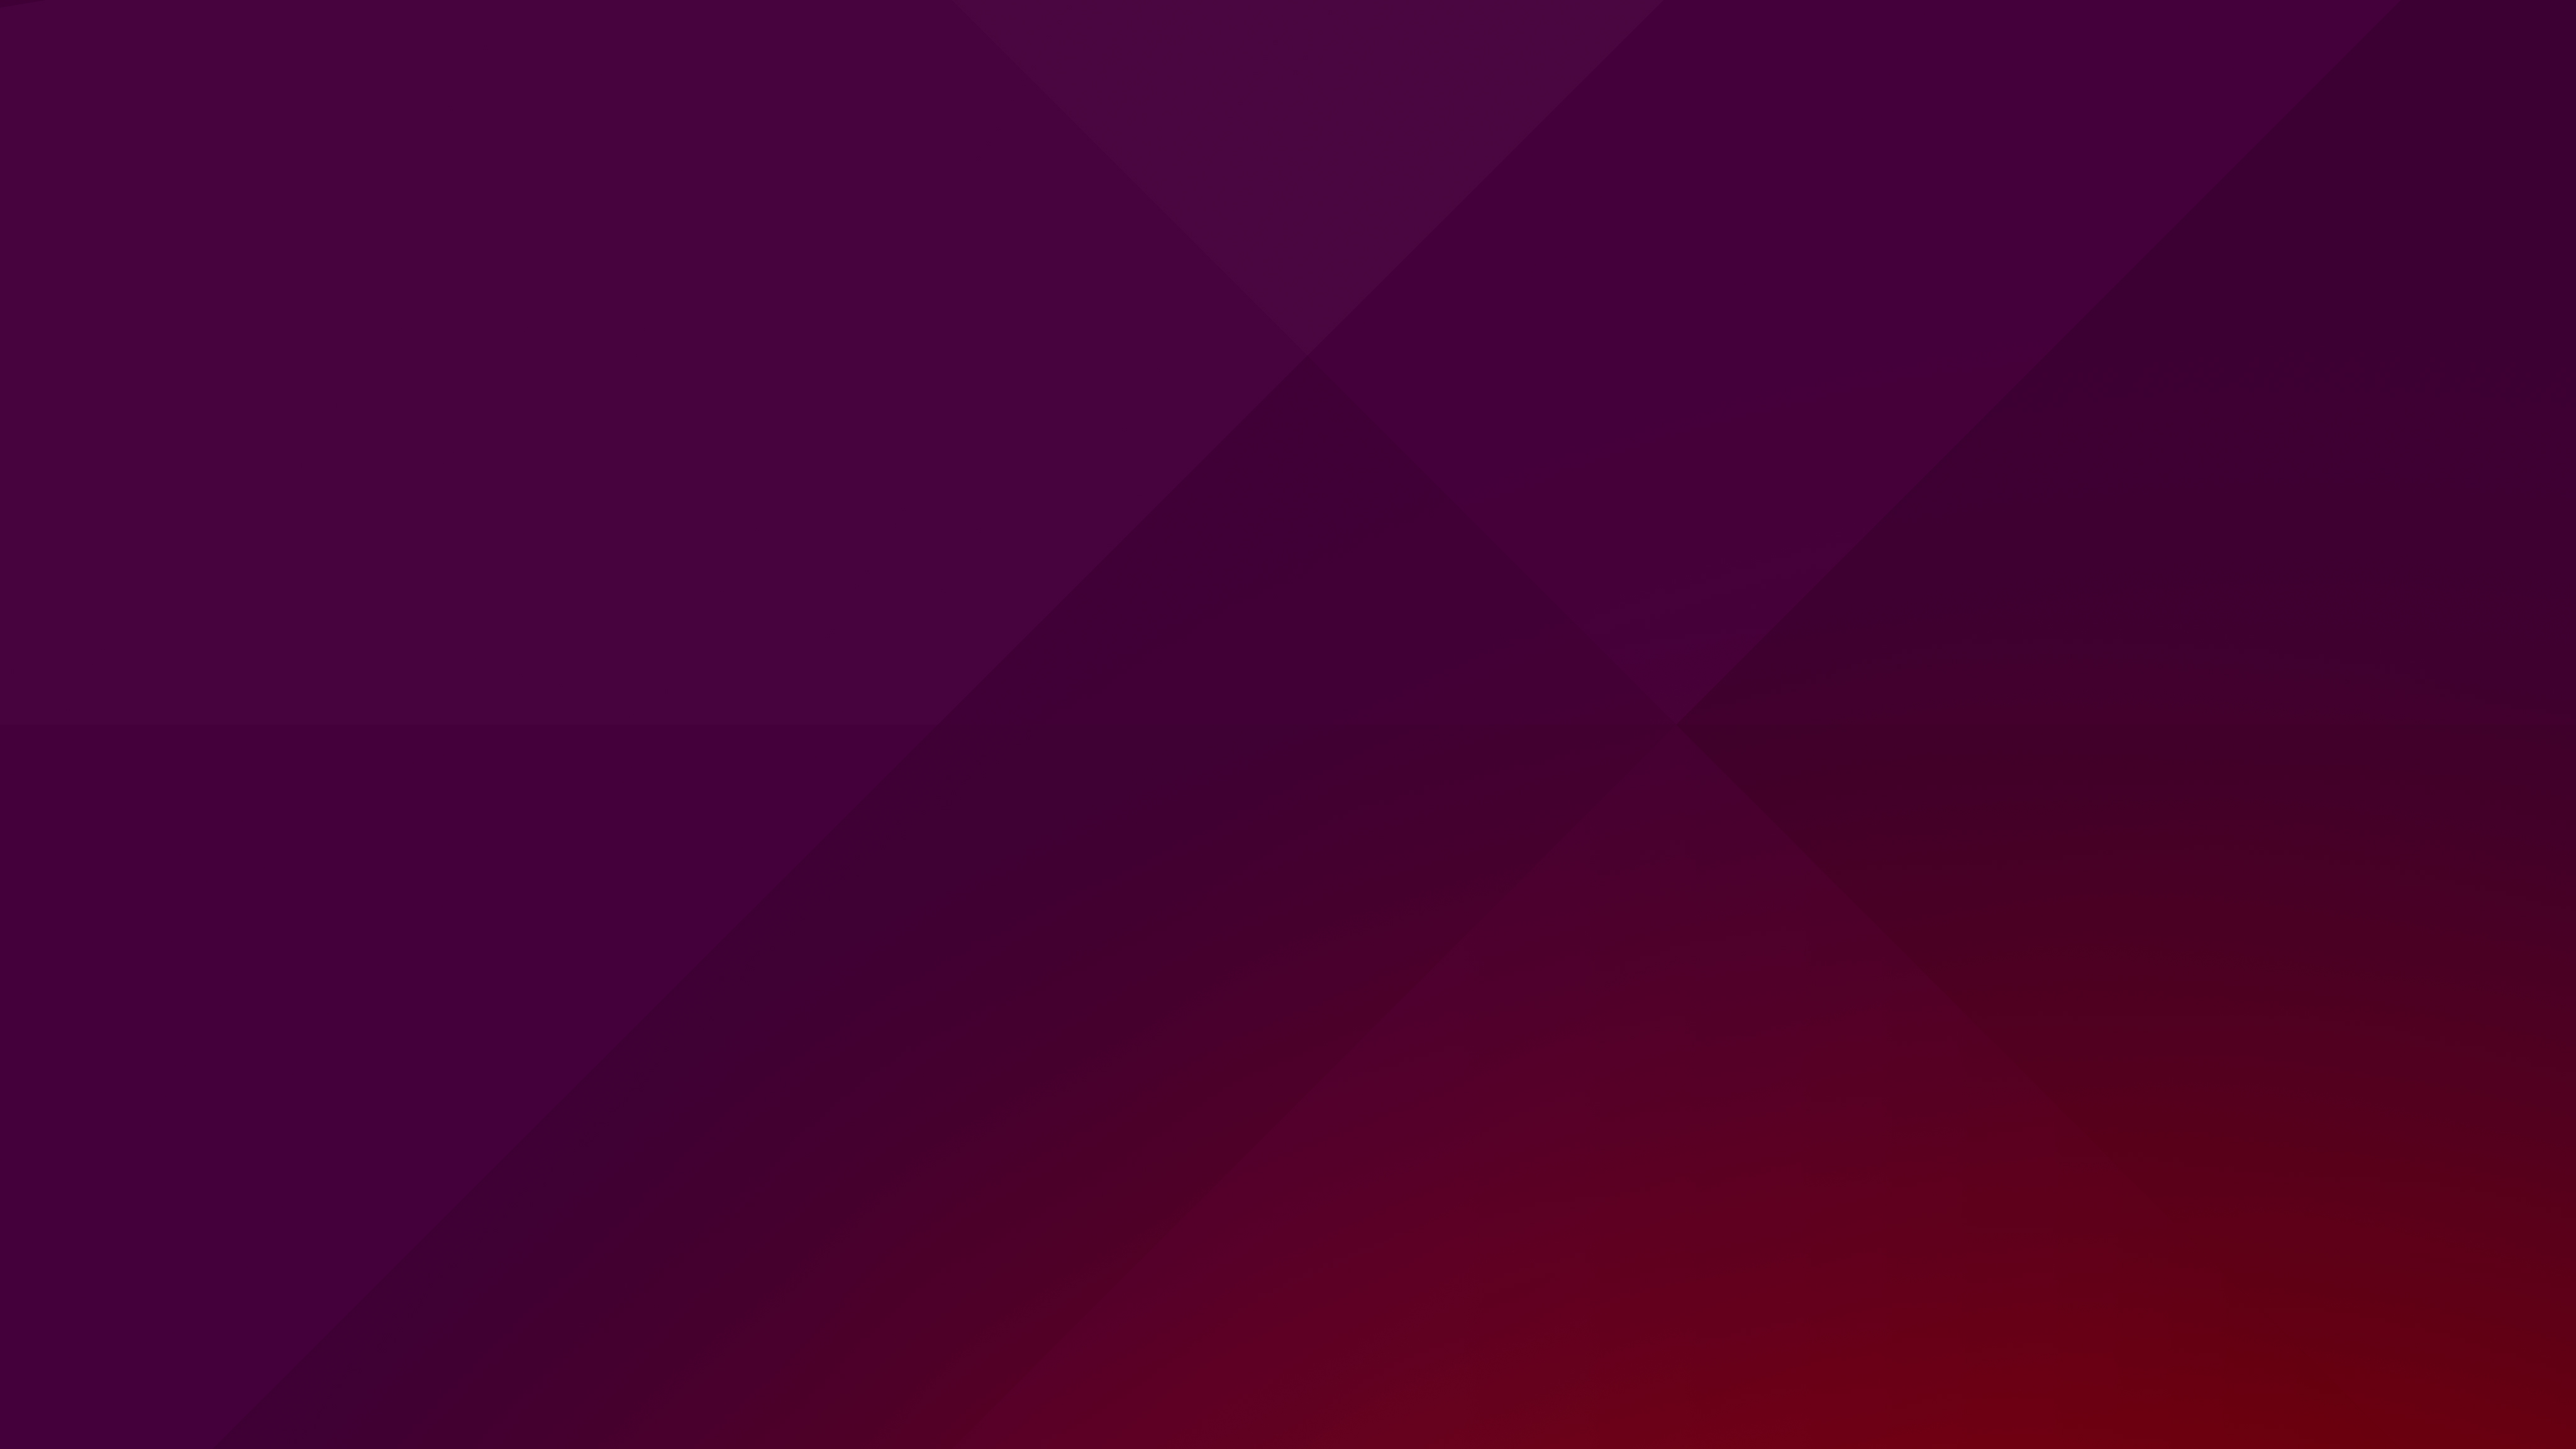 Default Ubuntu Wallpaper From Warty Warthog To